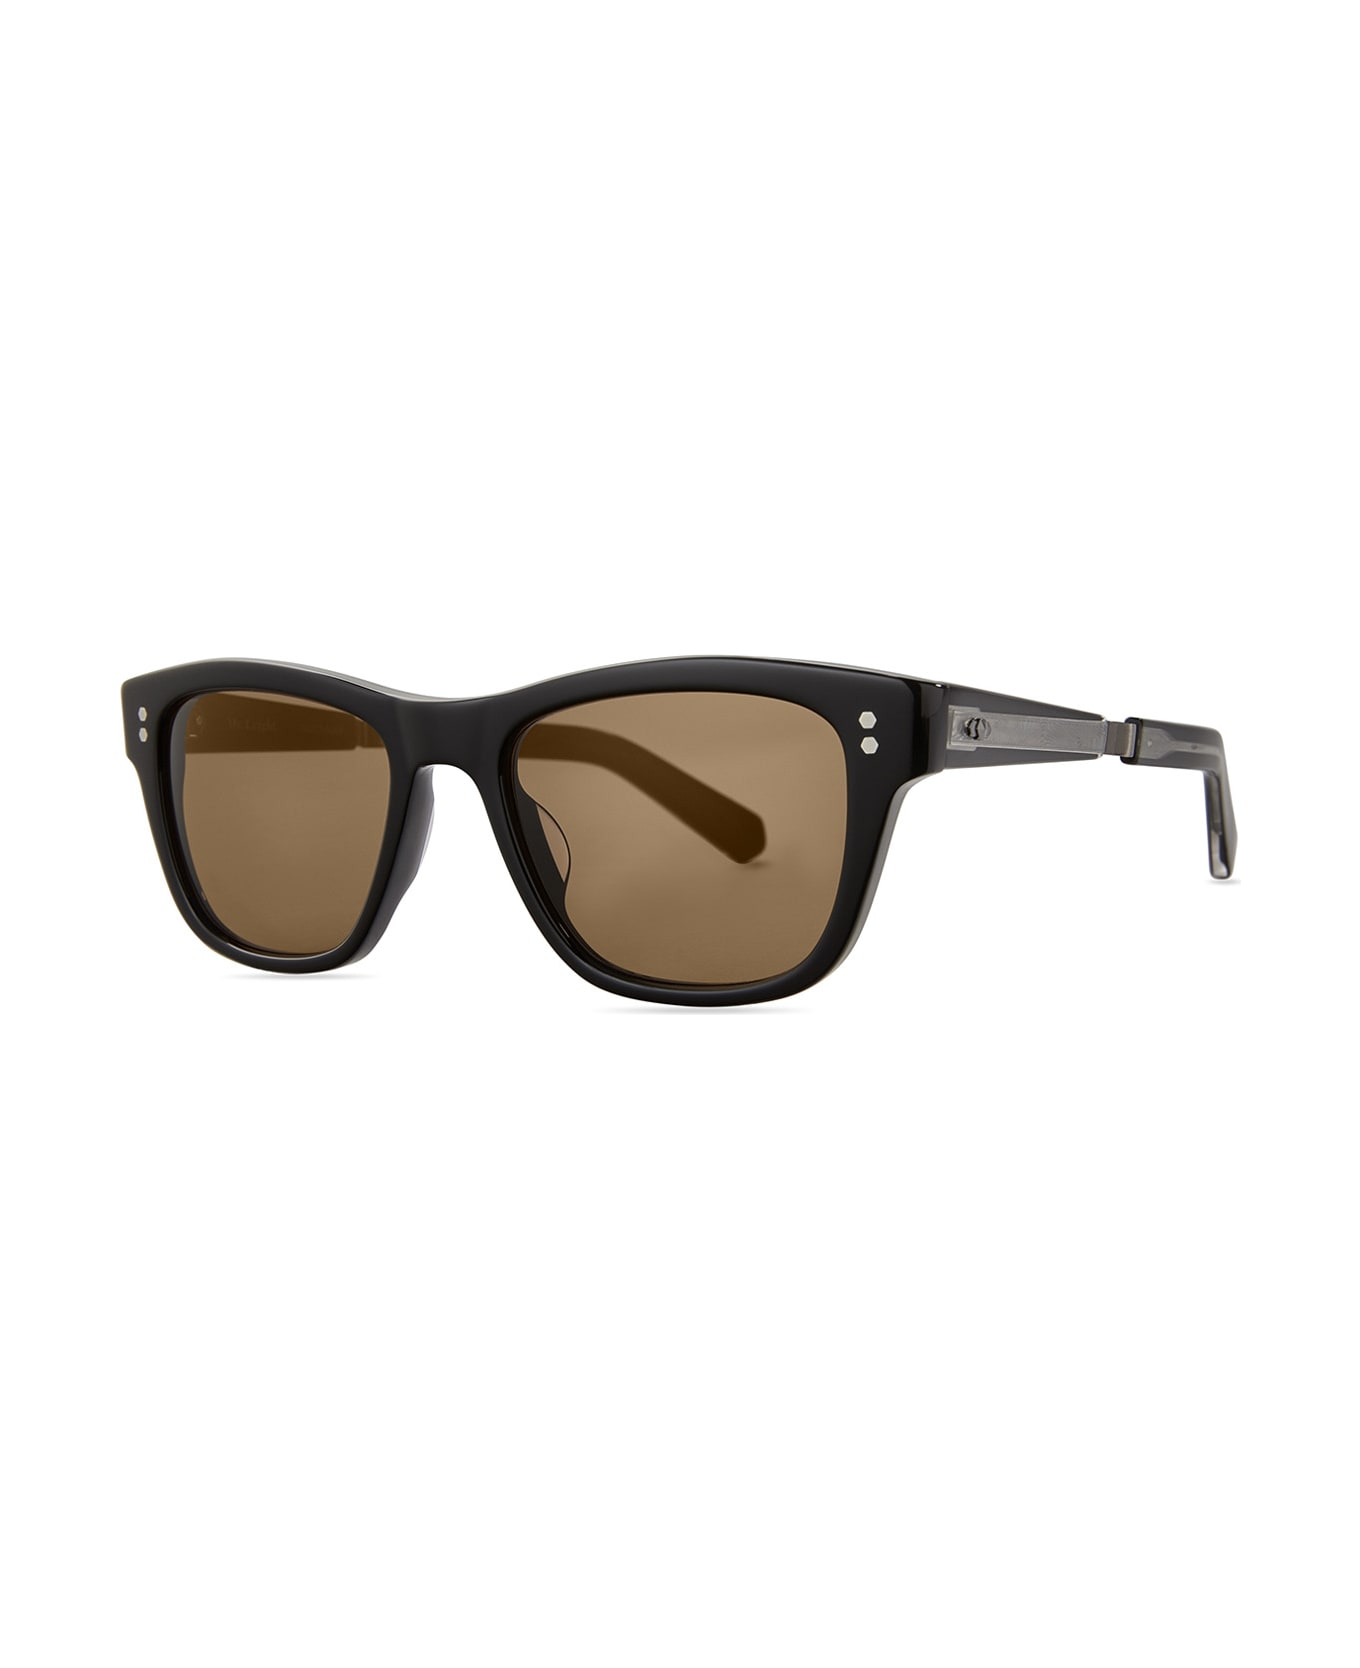 Mr. Leight Damone S Black-gunmetal/mojave Brown Polar Sunglasses - Black-Gunmetal/Mojave Brown Polar